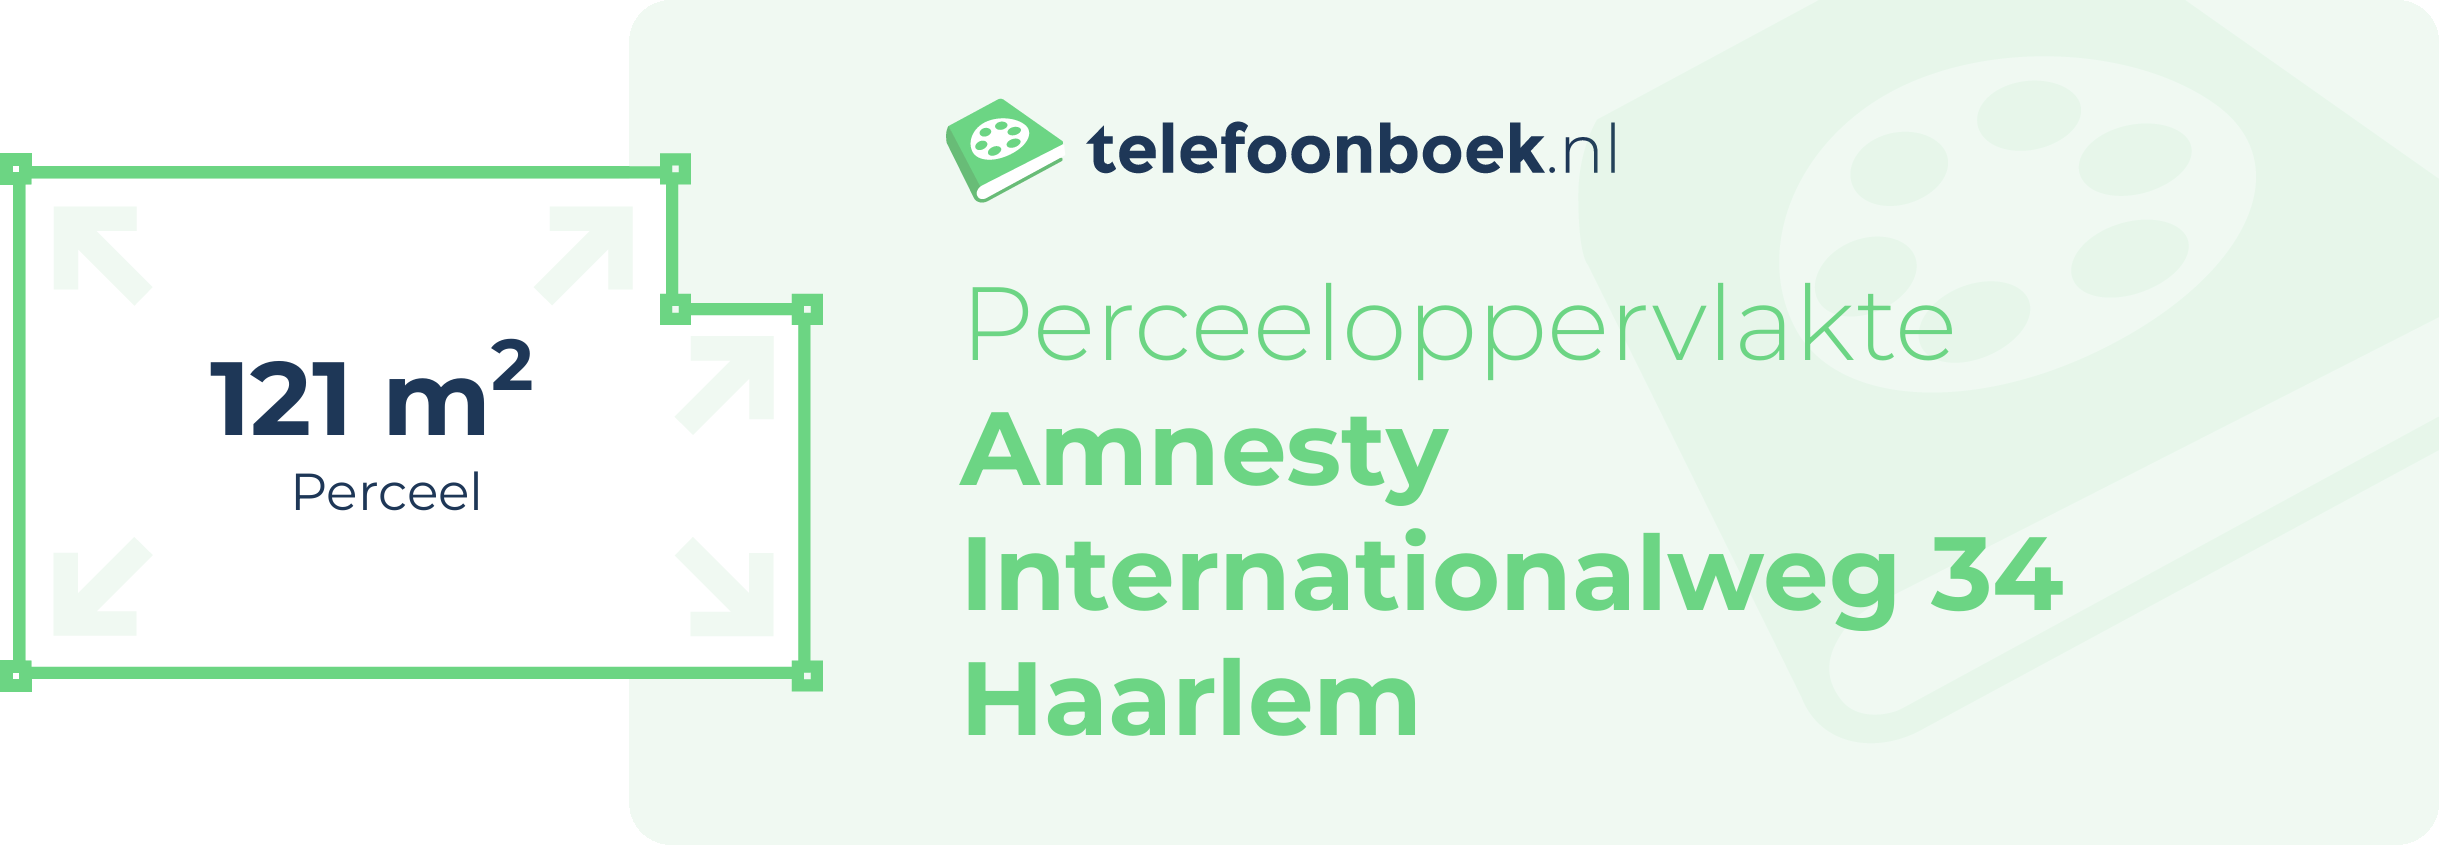 Perceeloppervlakte Amnesty Internationalweg 34 Haarlem